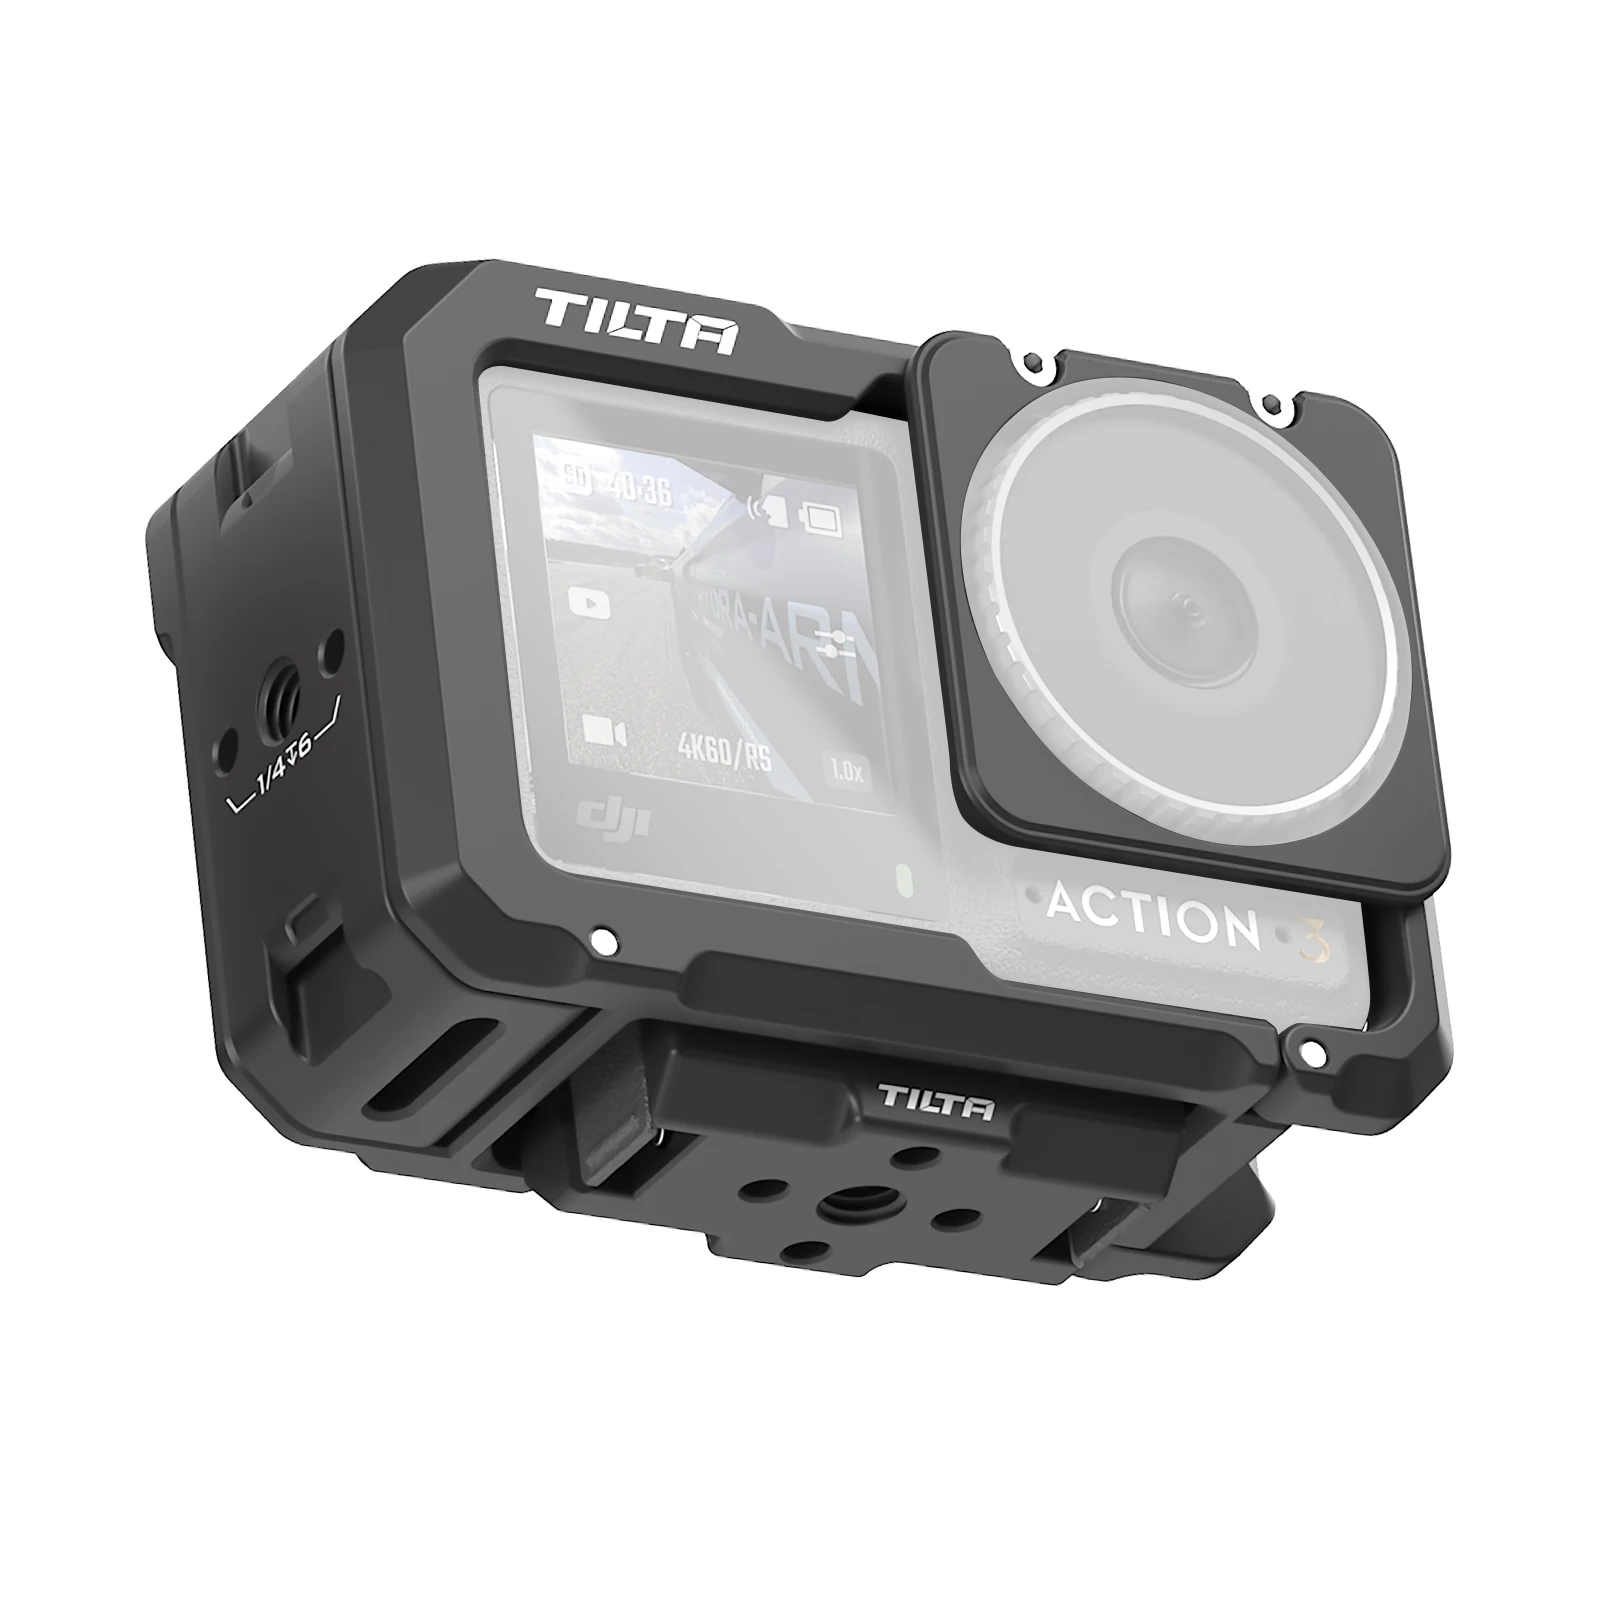 TILTA TA-T40-A DJI Osmo Action 3 DJI Osmo Action 4 Full Camera Cage  Titanium Gray Black Pink Tactical Gray - AliExpress